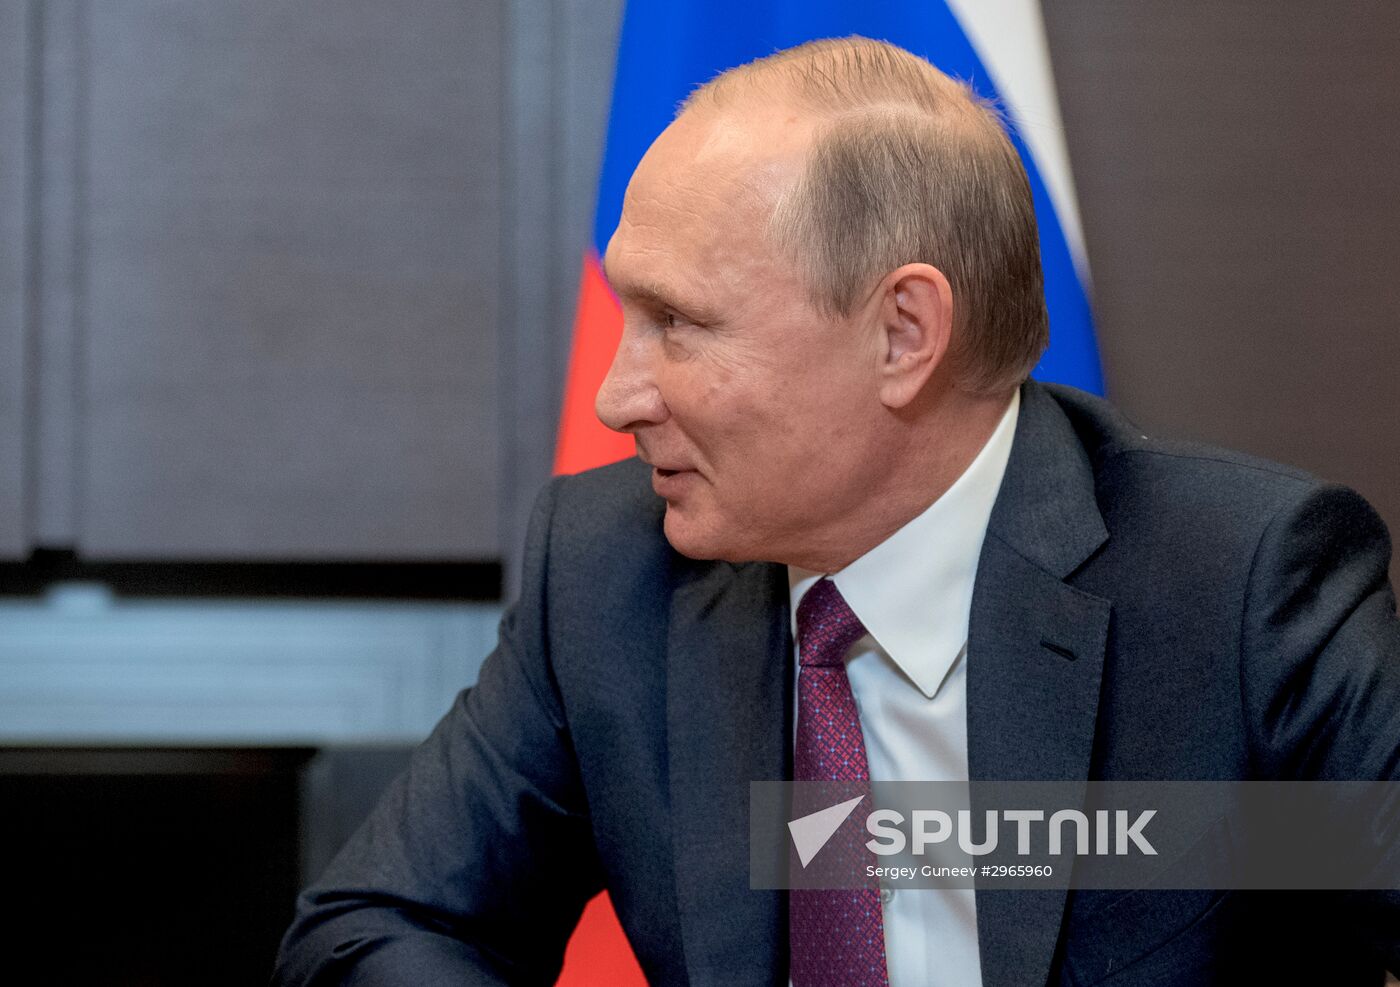 Vladimir Putin meets with Gurbanguly Berdimukhamedov